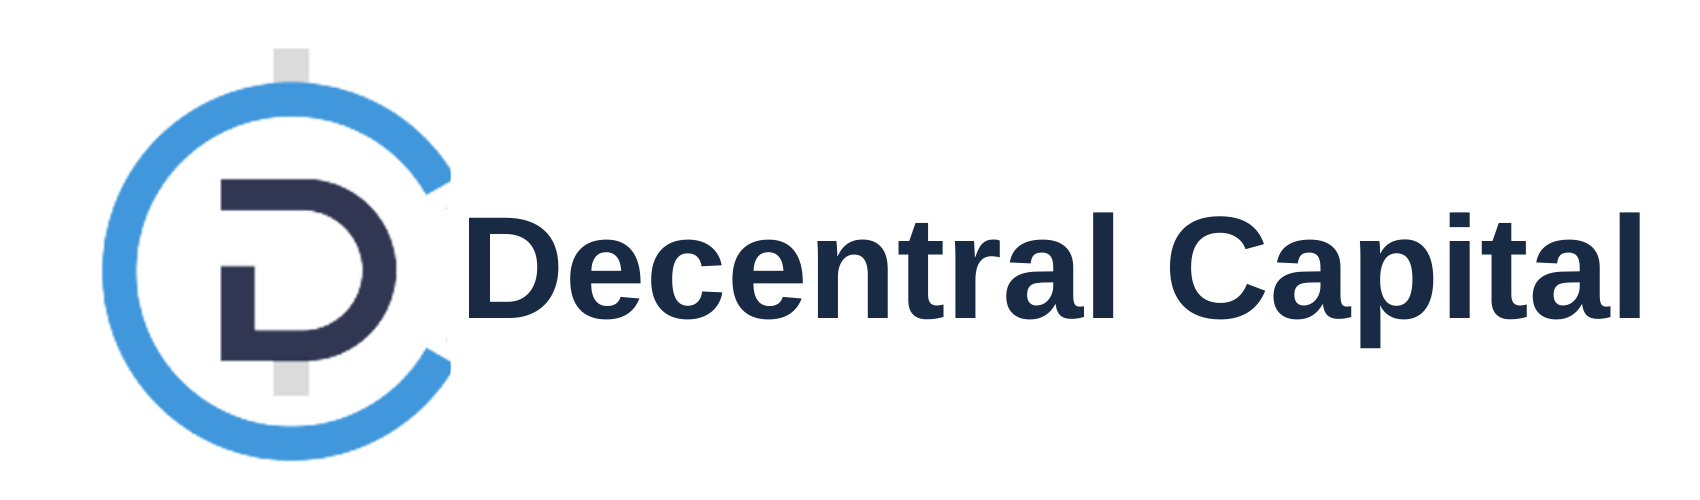 Decentral Capital Logo